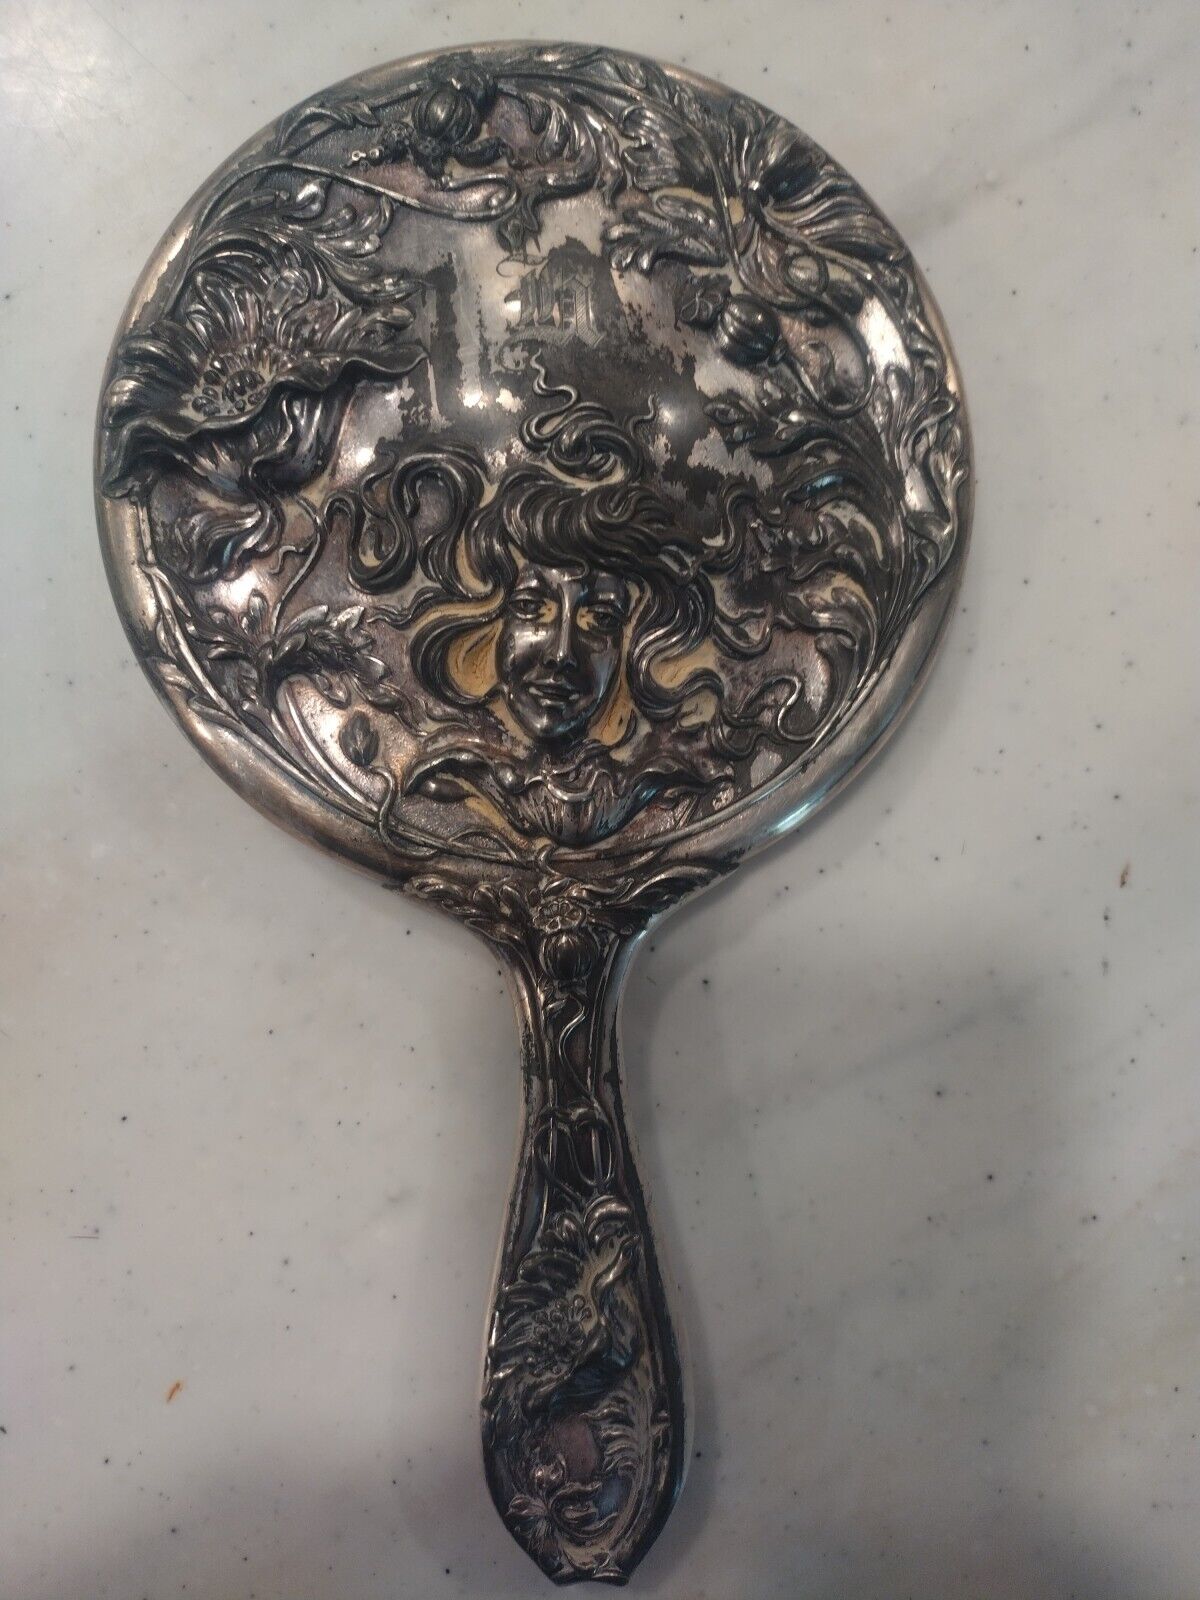 Antique Sterling Silver Hand Mirror ♡ Vintage Art Nouveau Vanity Accessories 